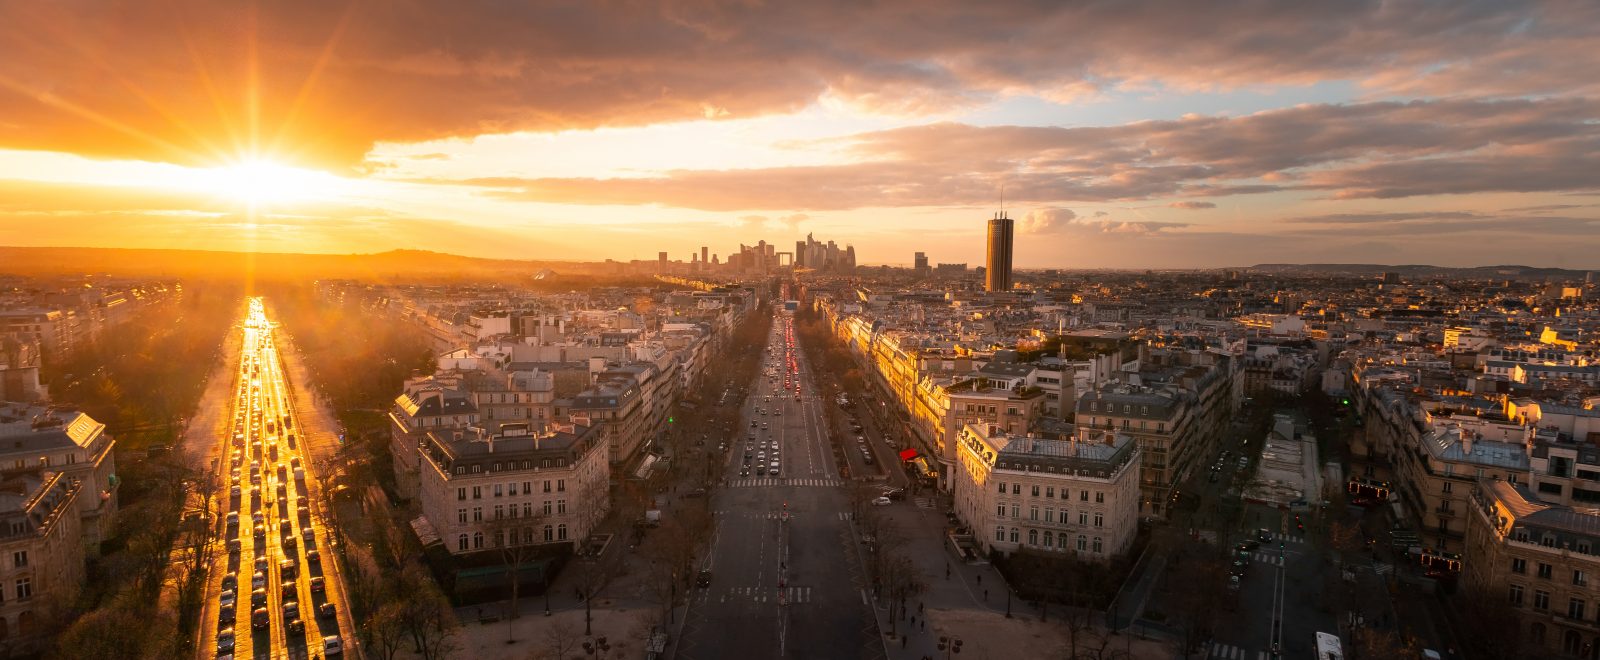 Paris, France, looking towards the financial district La Defense